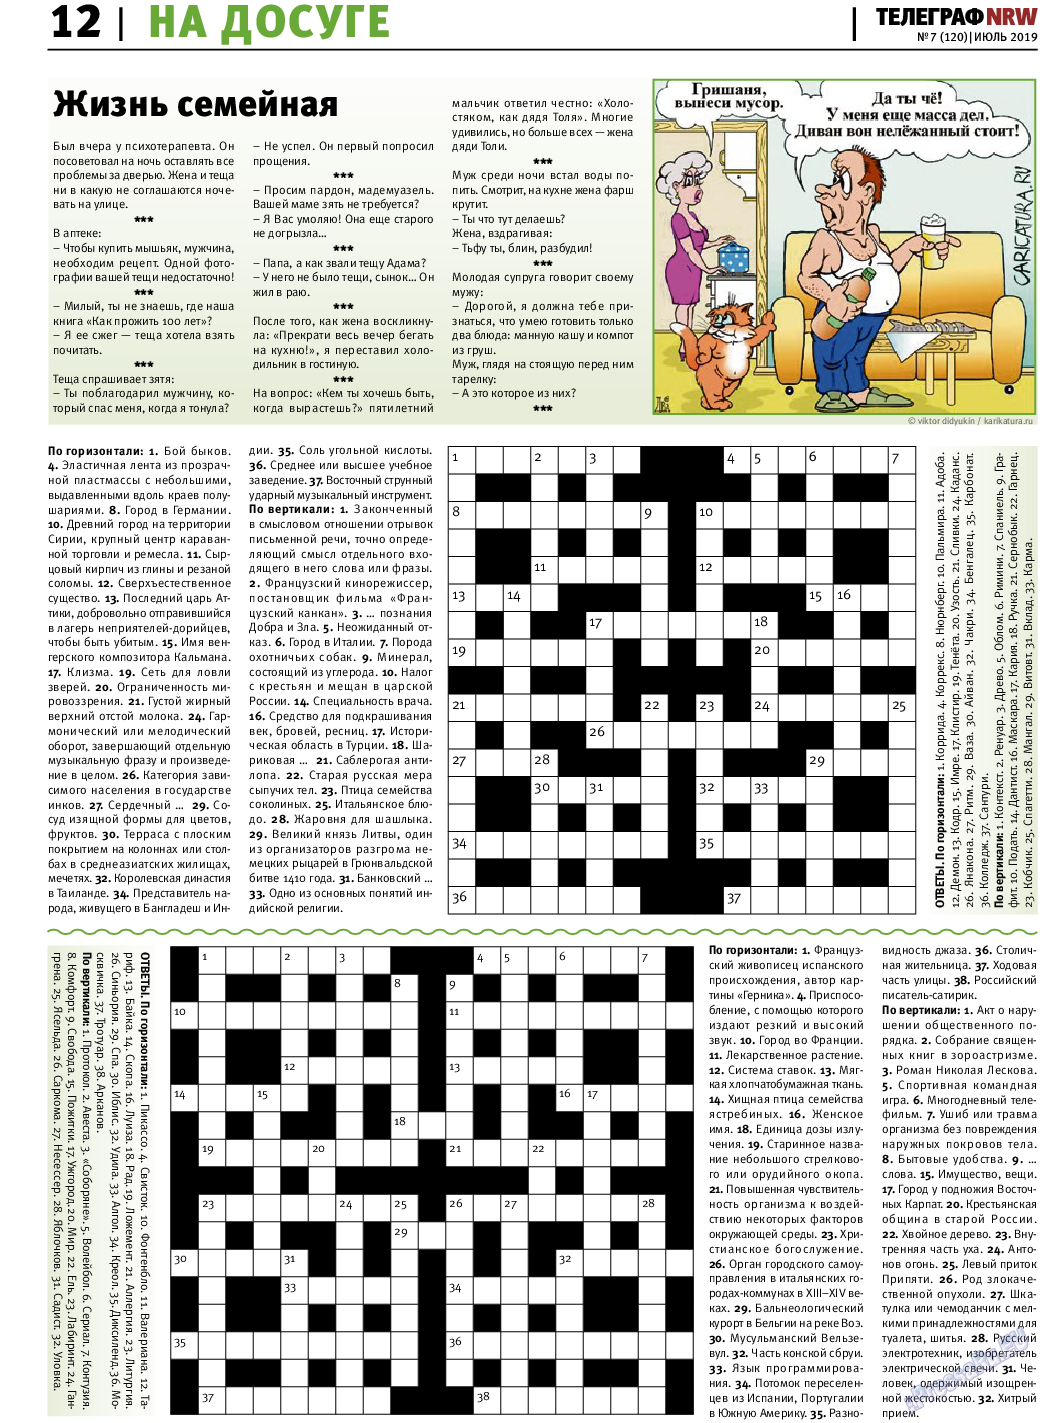 Телеграф NRW, газета. 2019 №7 стр.12